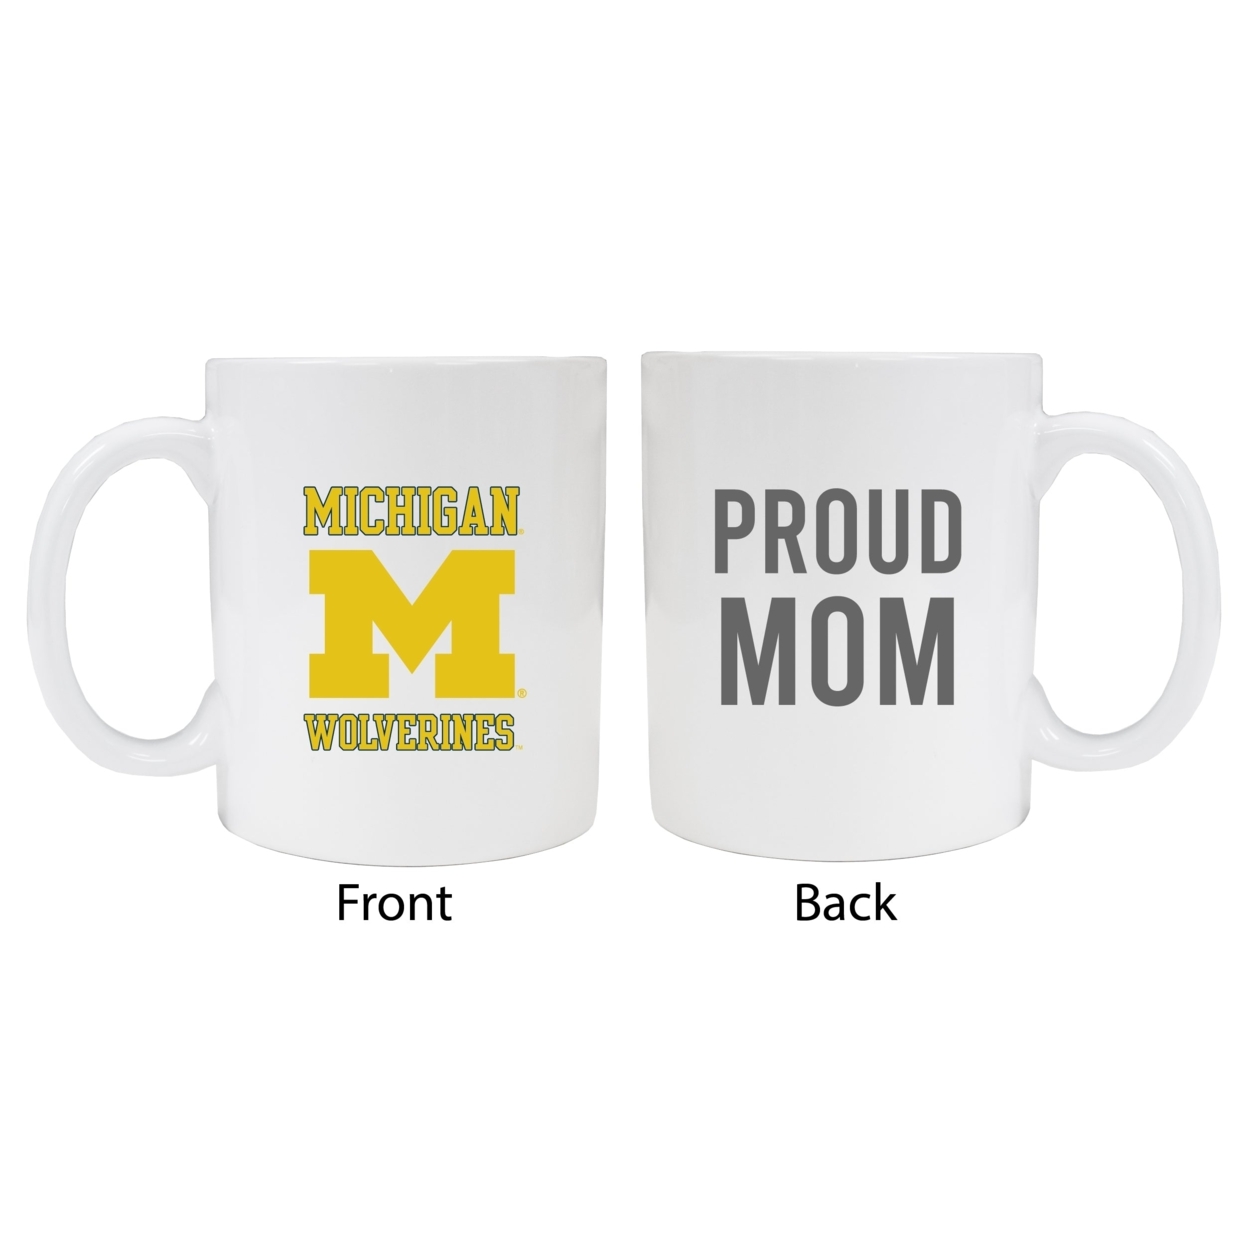 Michigan Wolverines Proud Mom Ceramic Coffee Mug - White (2 Pack)